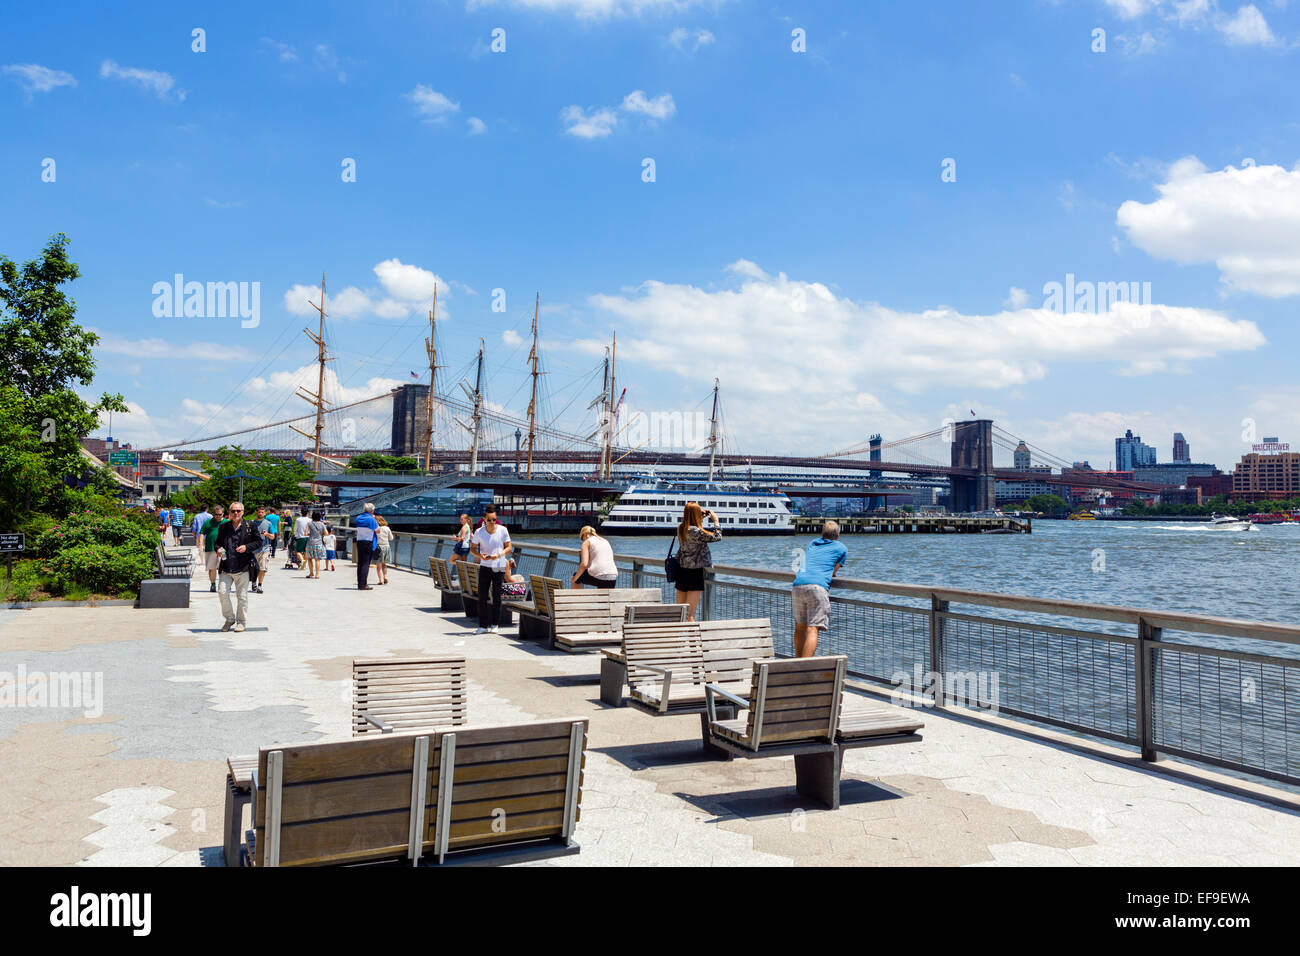 The East River Esplanade looking towards Brooklyn Bridge and South Street Seaport, Lower Manhattan, New York City, NY, USA Stock Photo